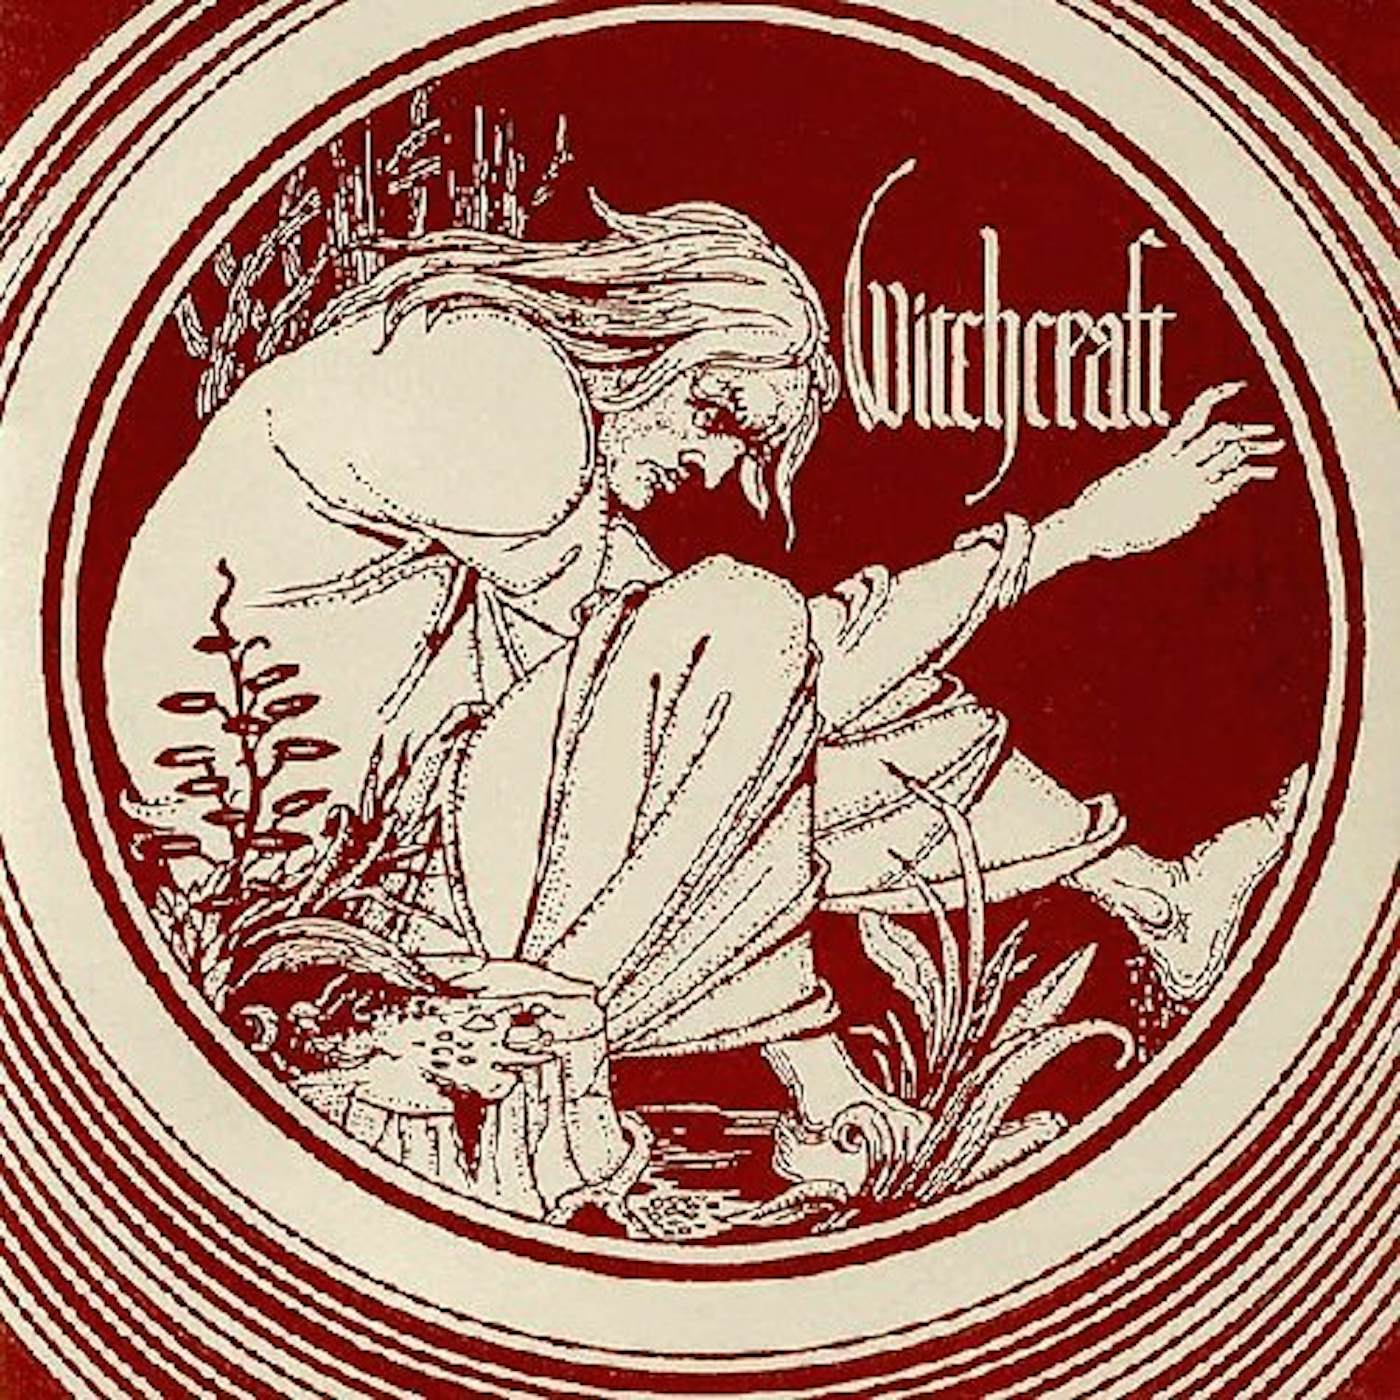 WITCHCRAFT Vinyl Record - Deluxe Edition, Reissue